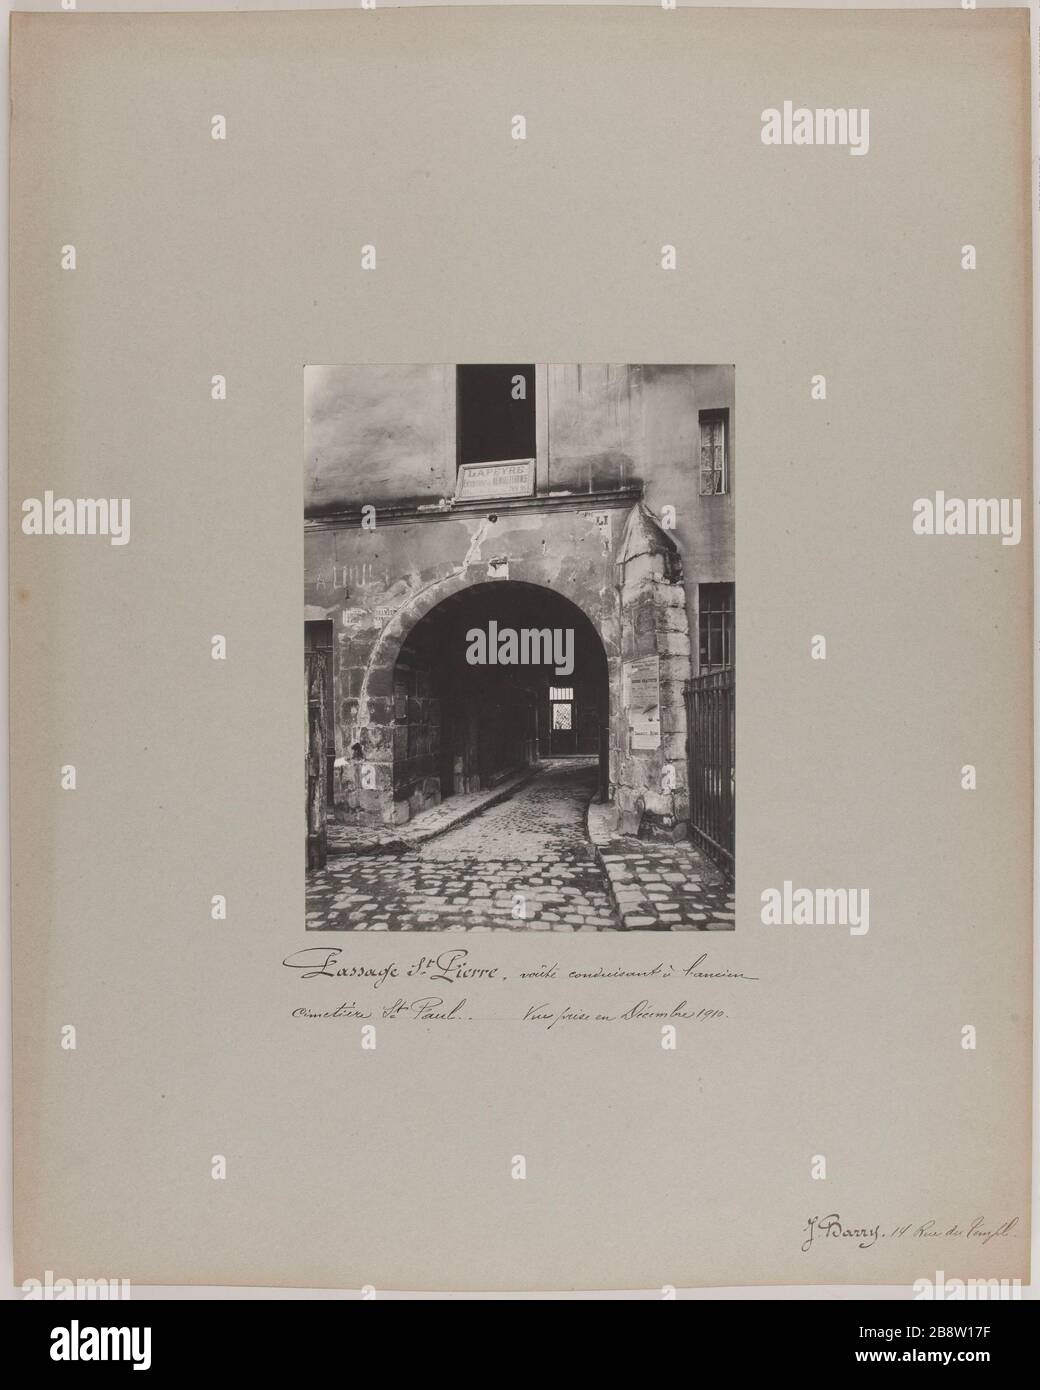 Cimetiere saint pierre hi-res stock photography and images - Alamy